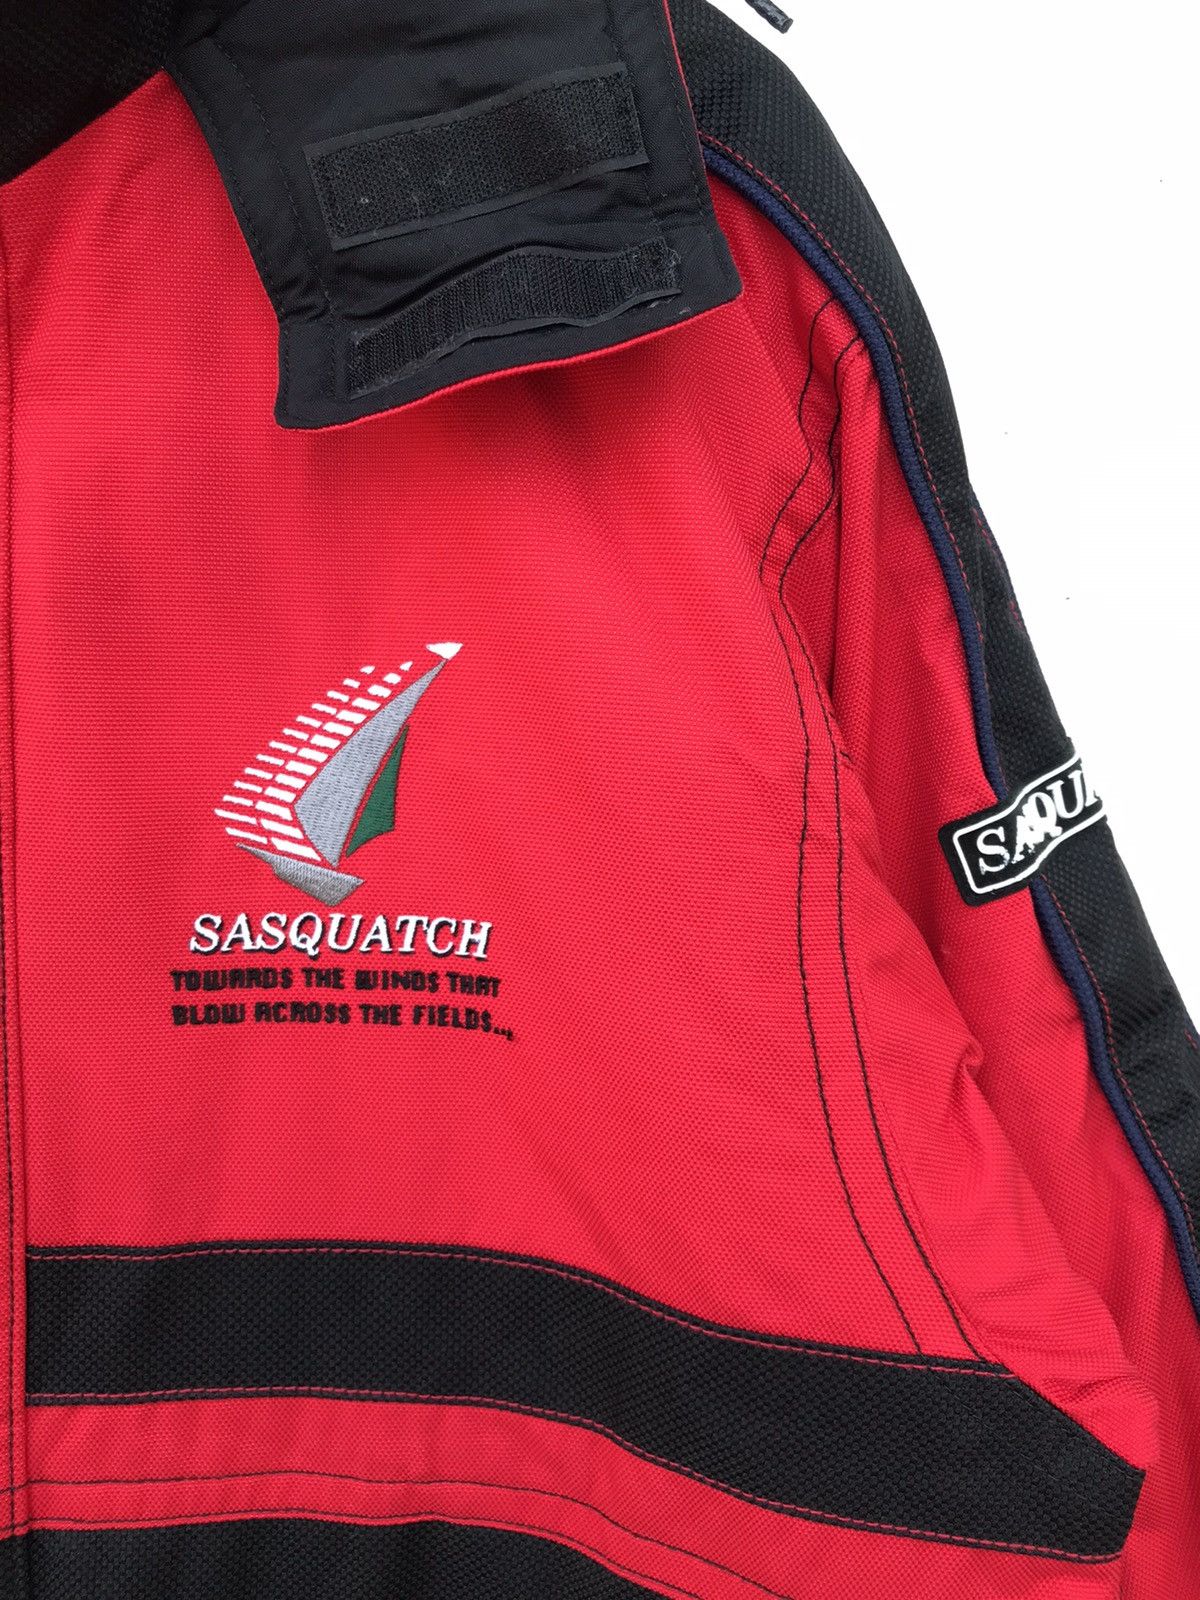 Sasquatch Ski One Set Jacket With Pants - 12